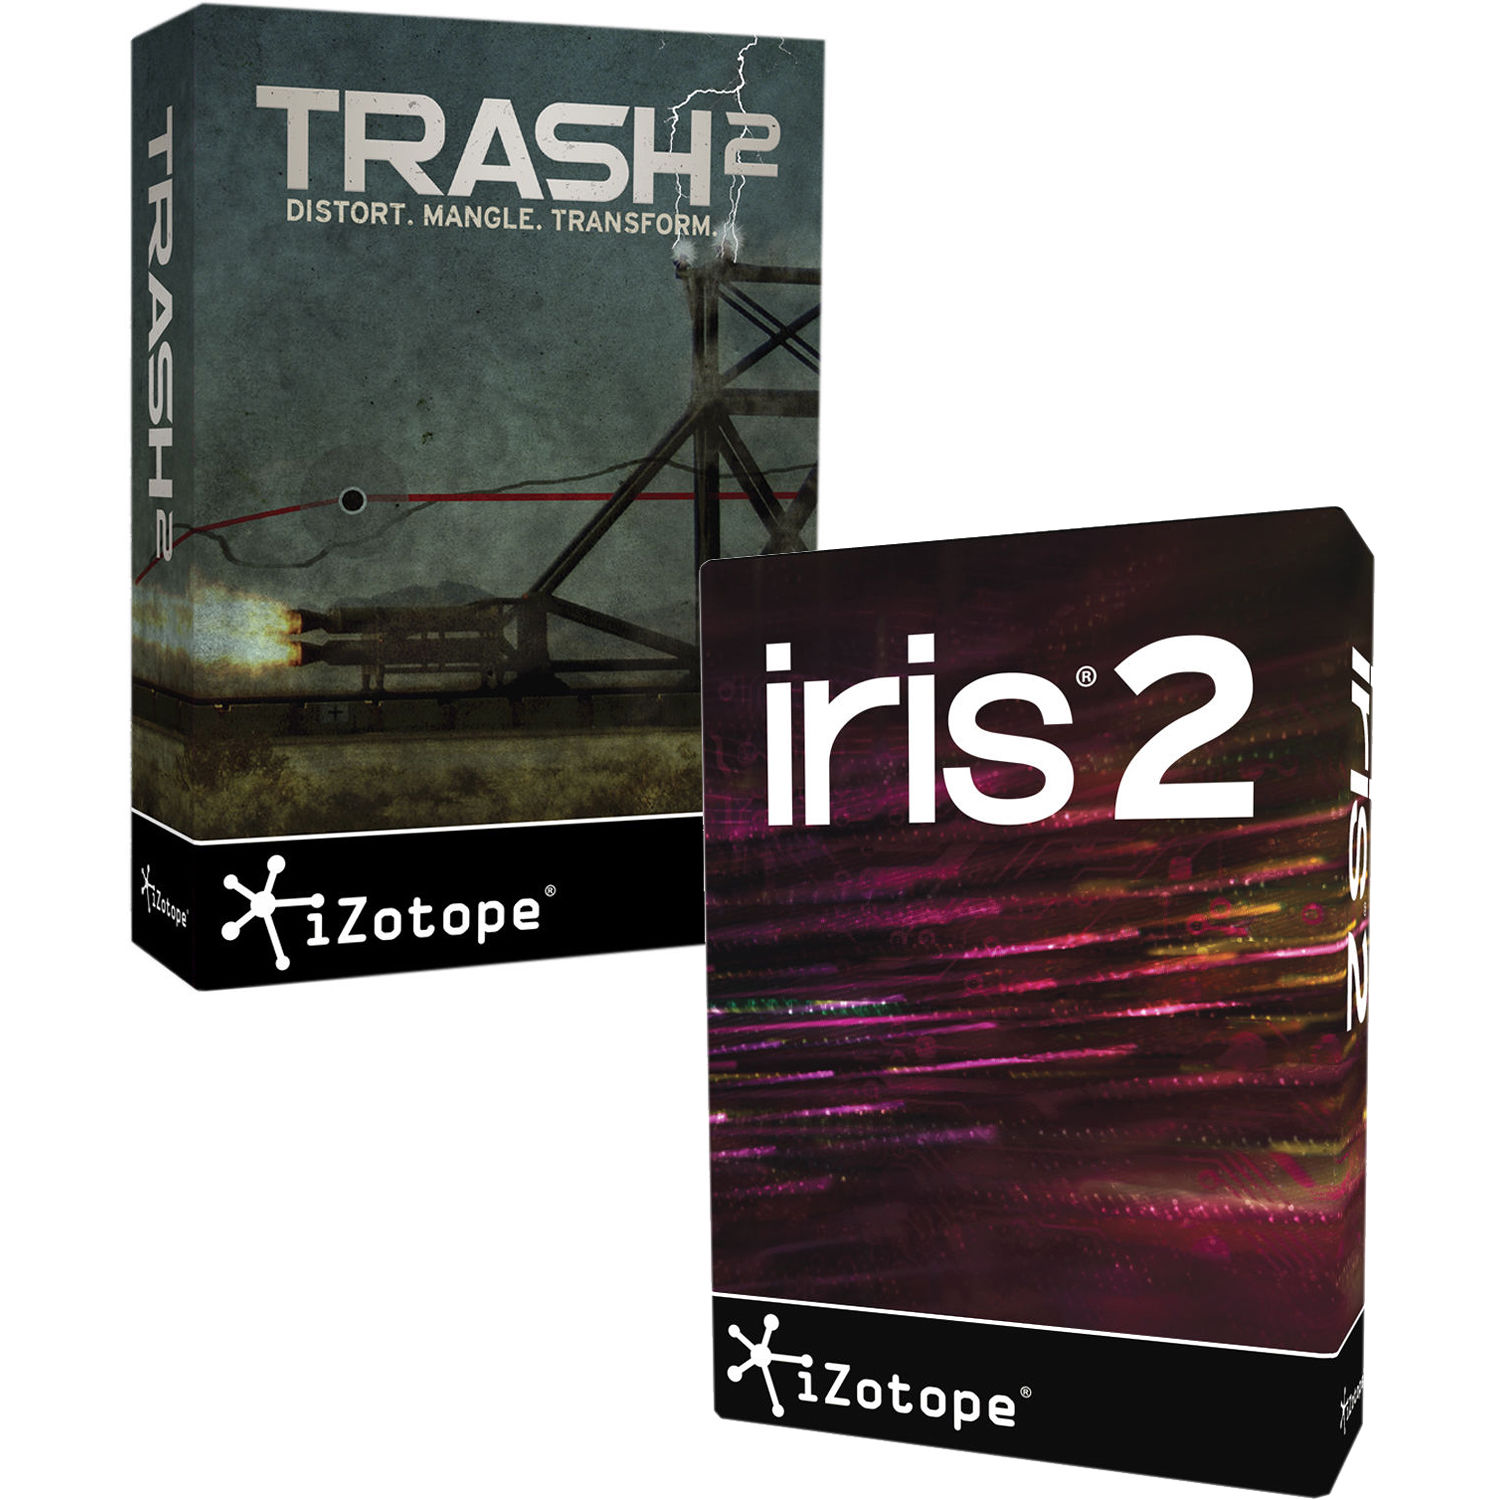 Izotope trash vst free download